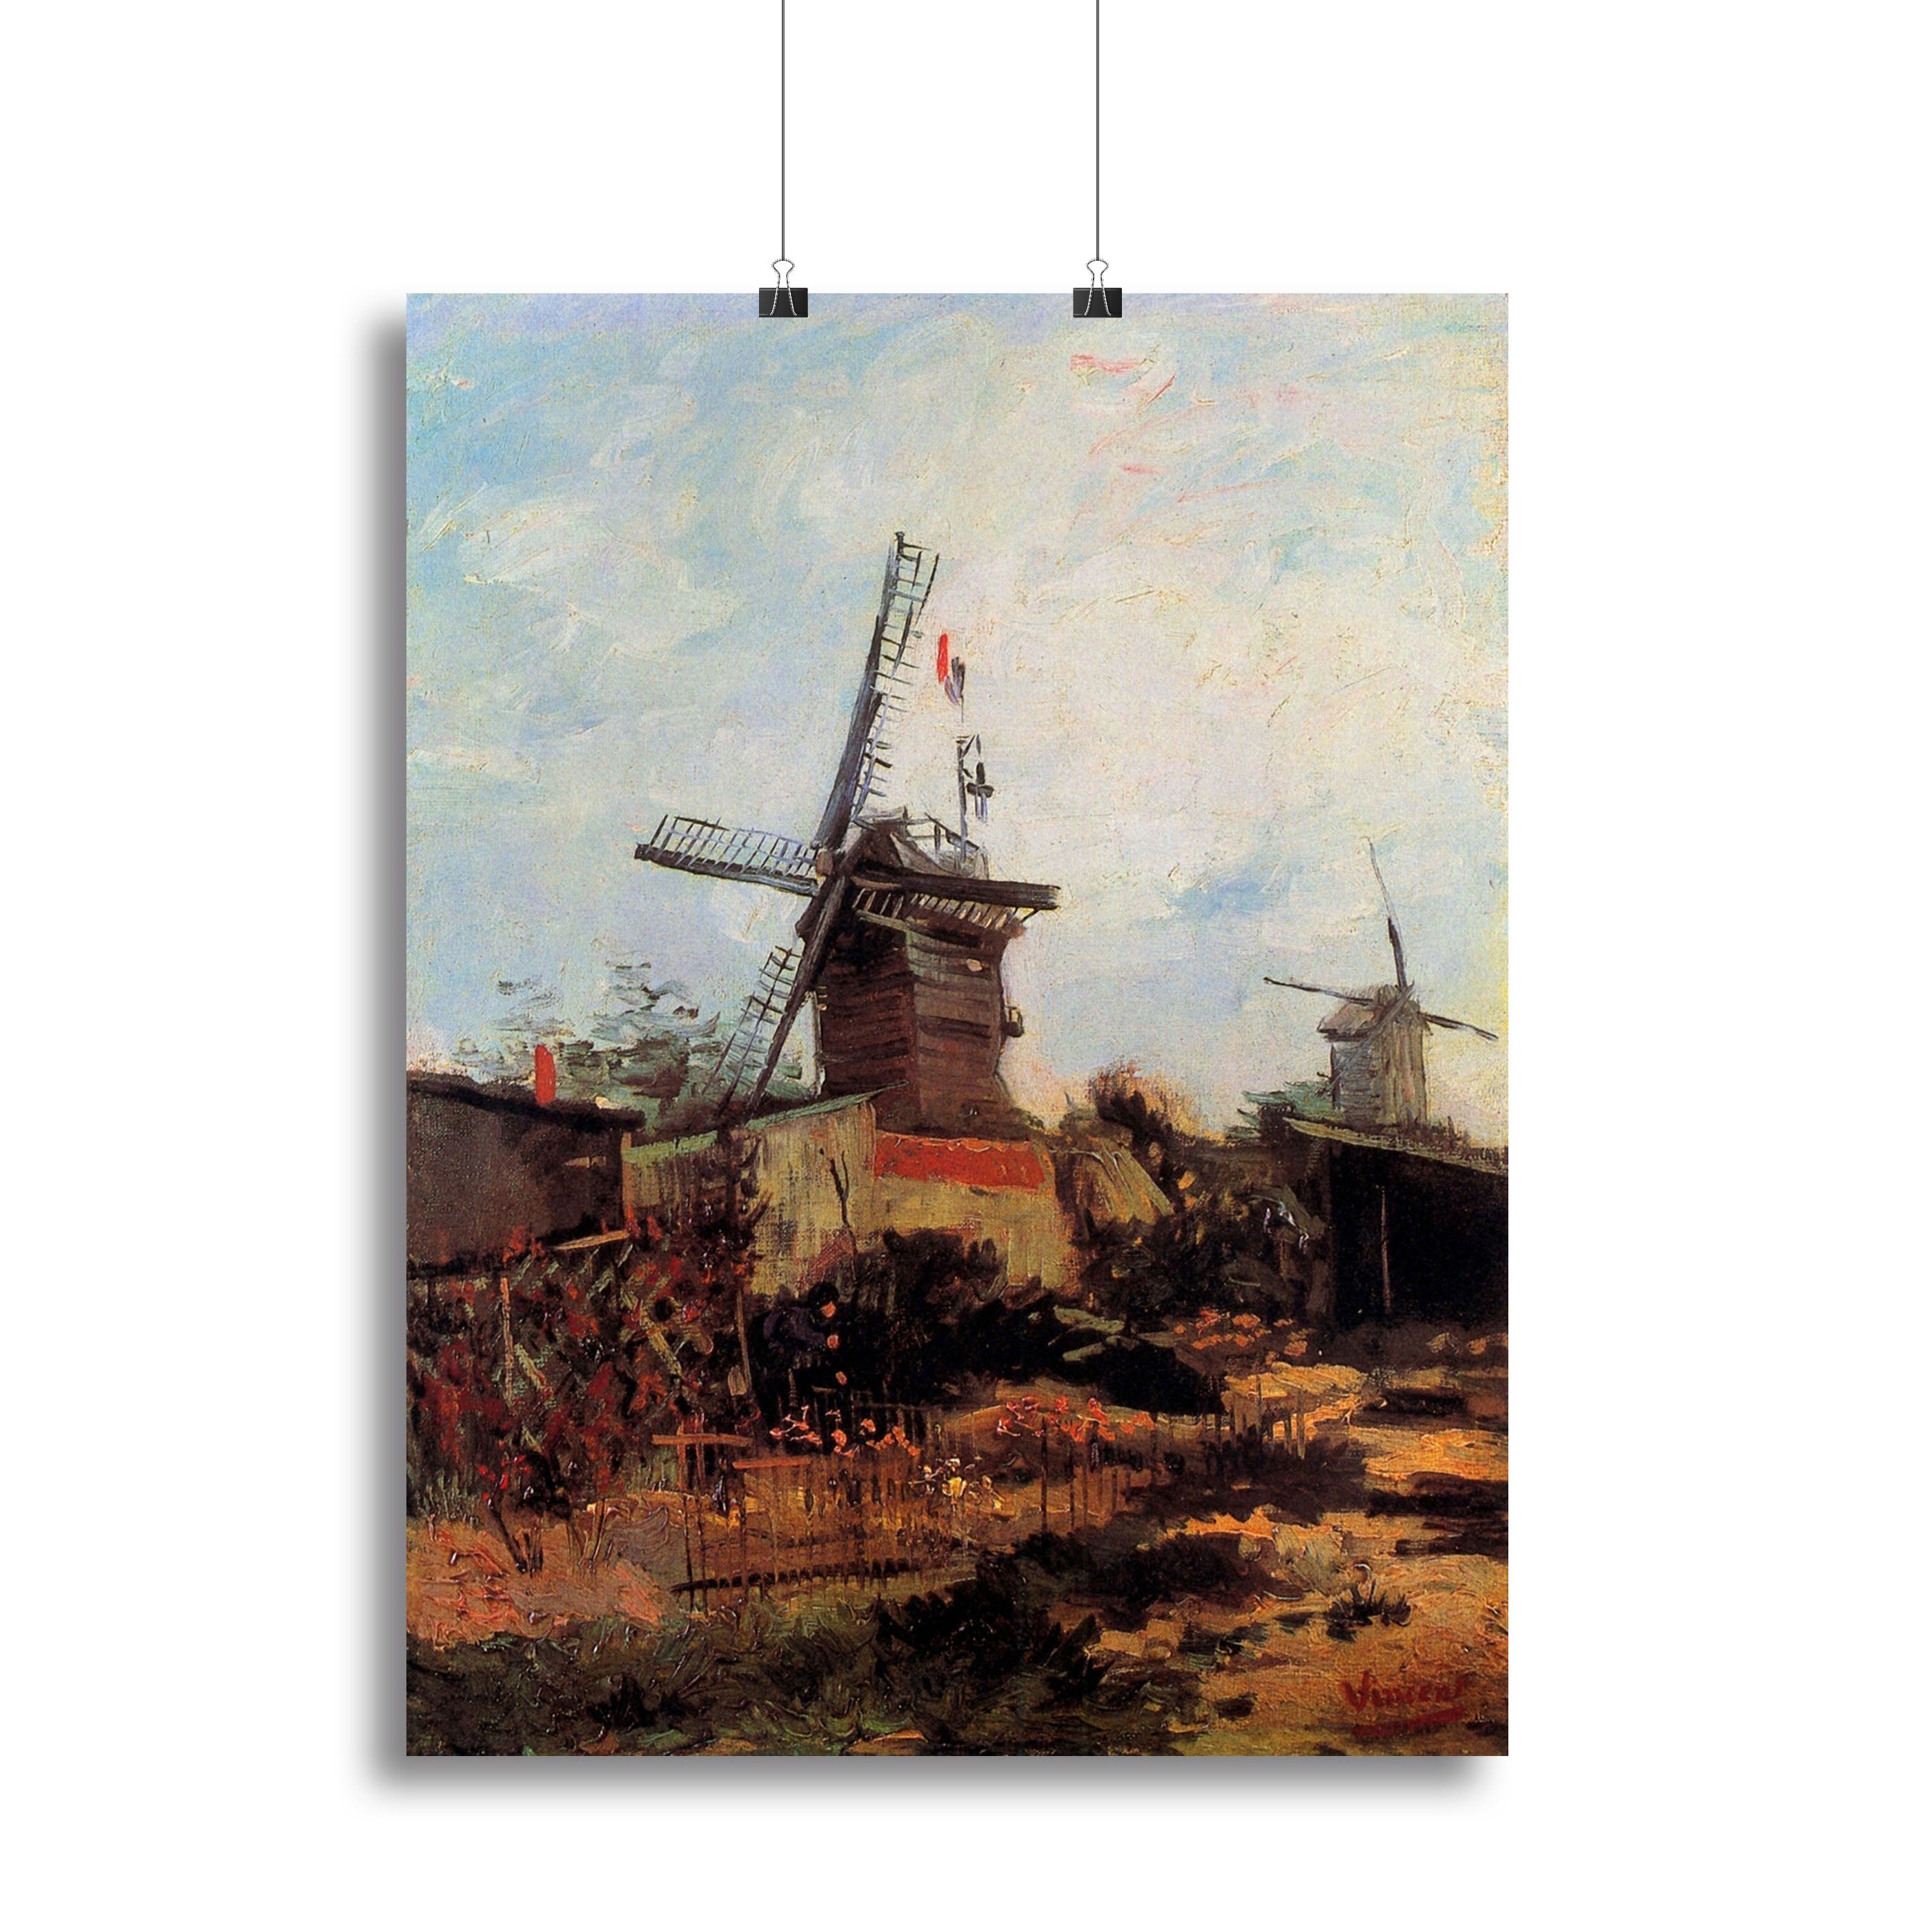 Le Moulin de Blute-Fin by Van Gogh Canvas Print or Poster - Canvas Art Rocks - 2